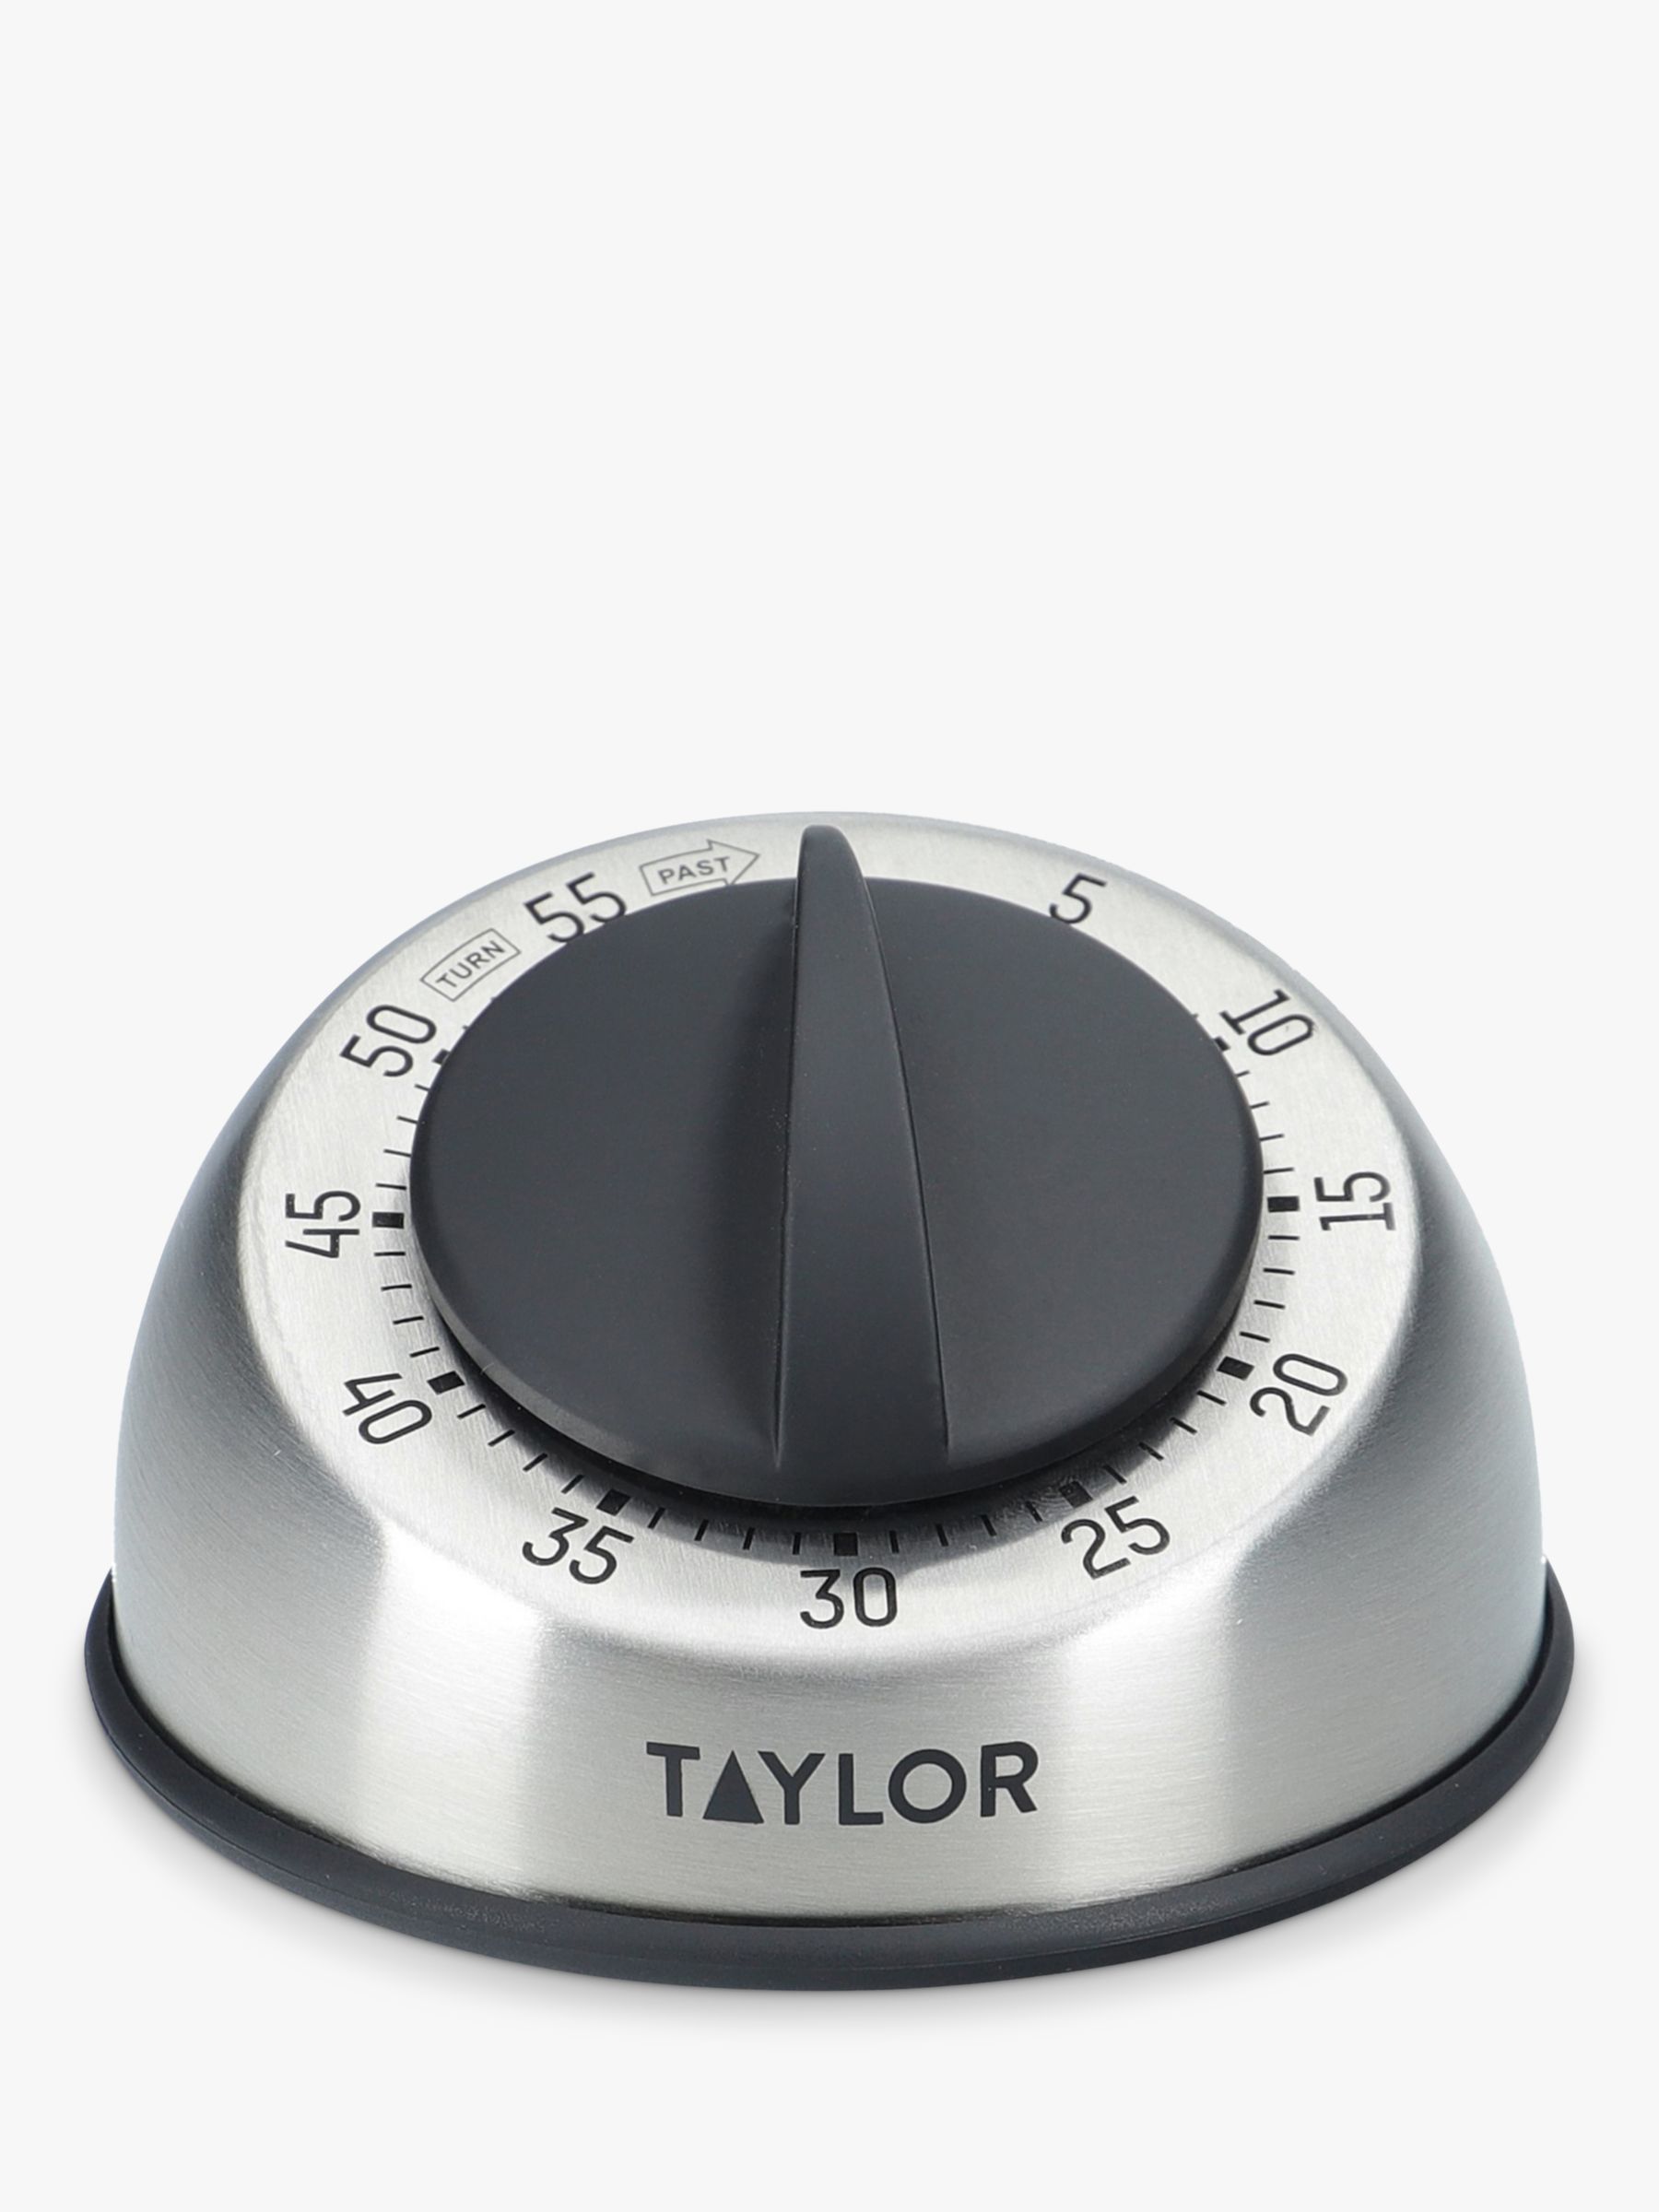 Digital Timer, Taylor Pro - Kitchen Craft